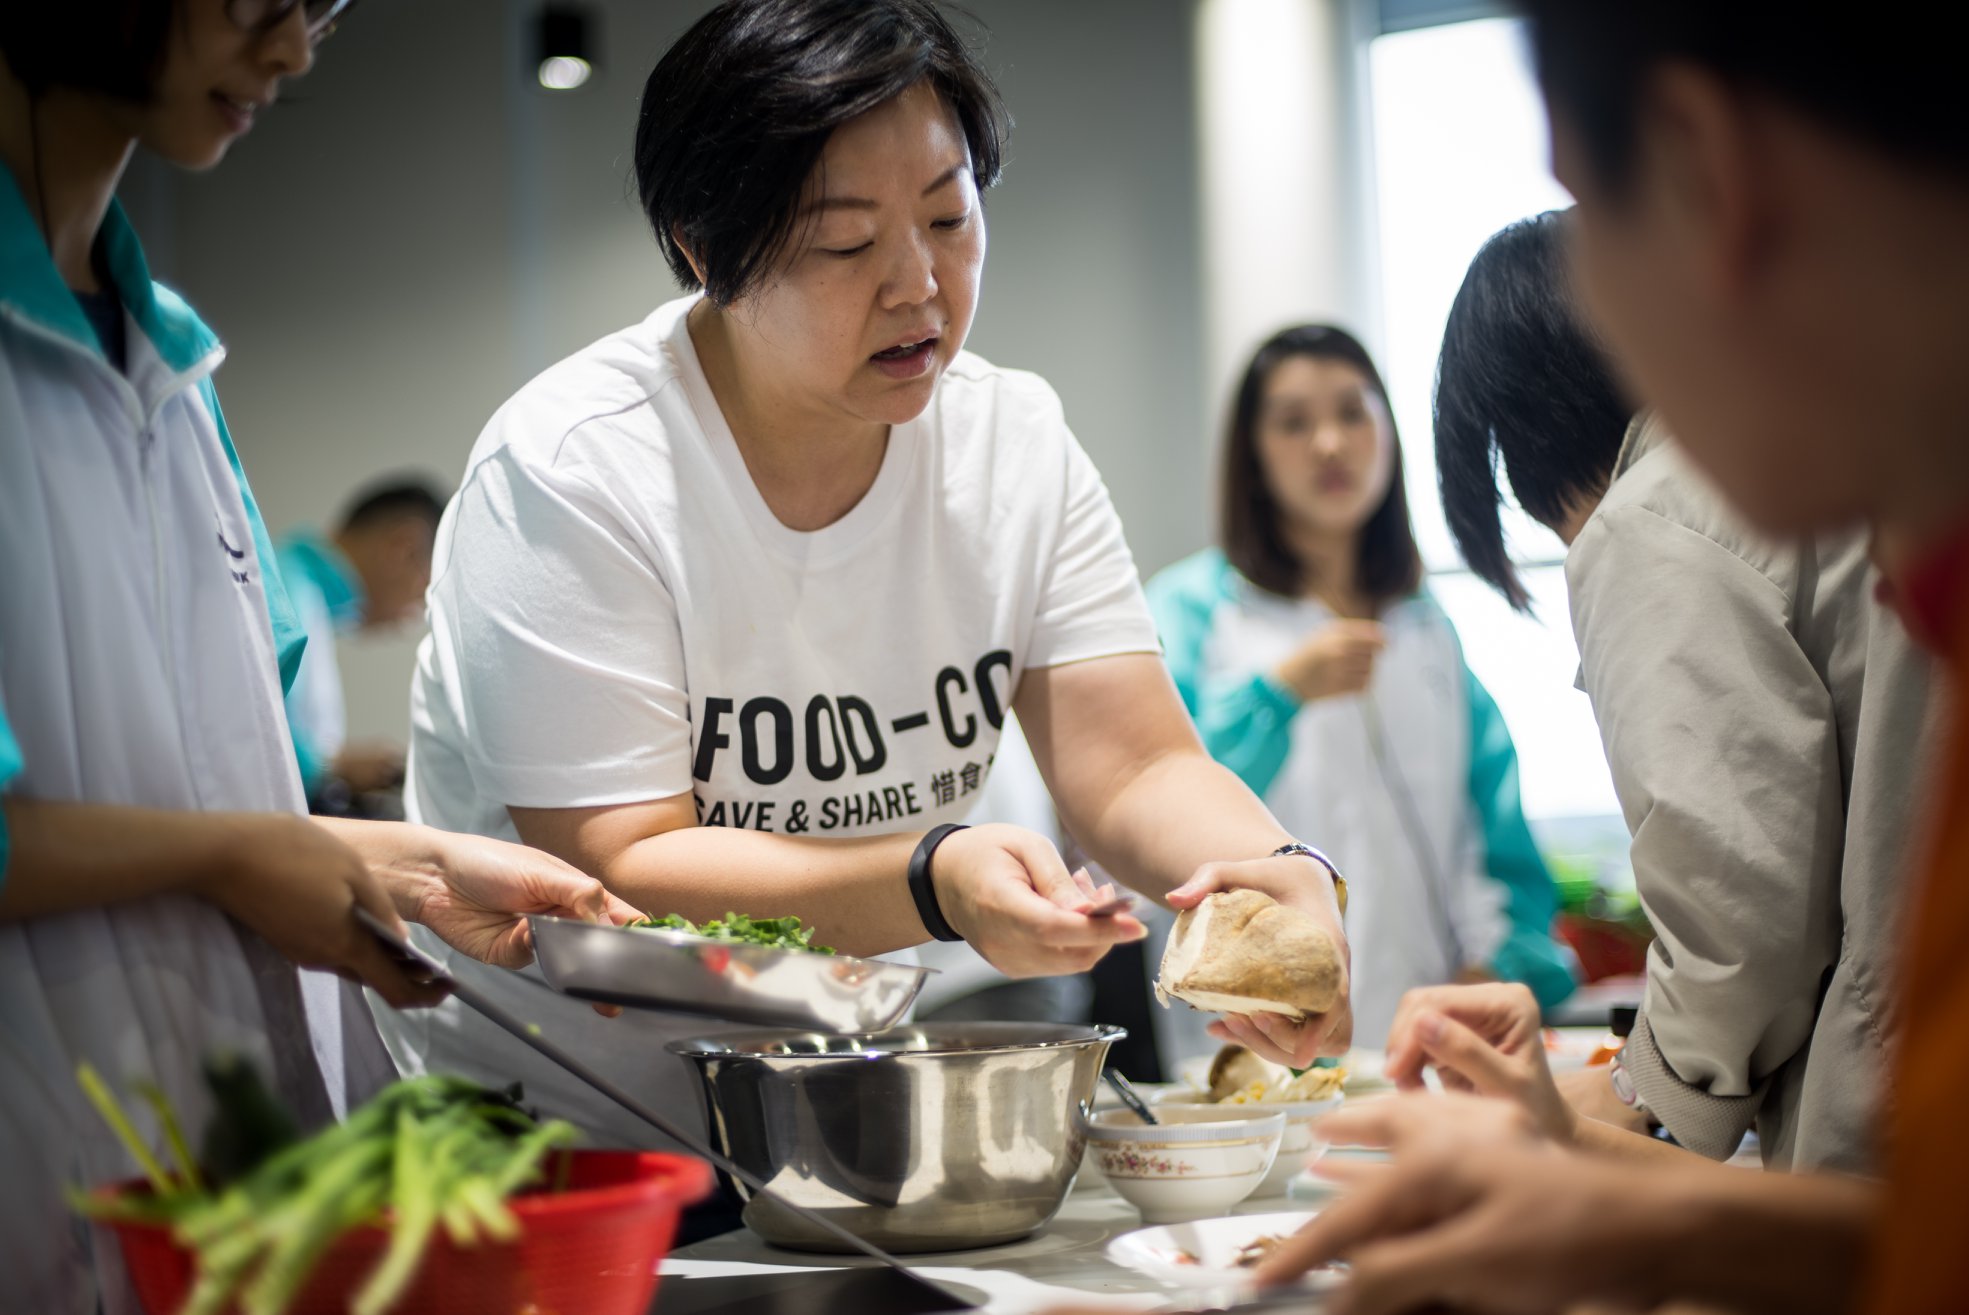 FOOD-CO推動惜食及共享文化，分配食物予援助機構，幫助匱乏紓解貧困。（FOOD-CO fb圖片）